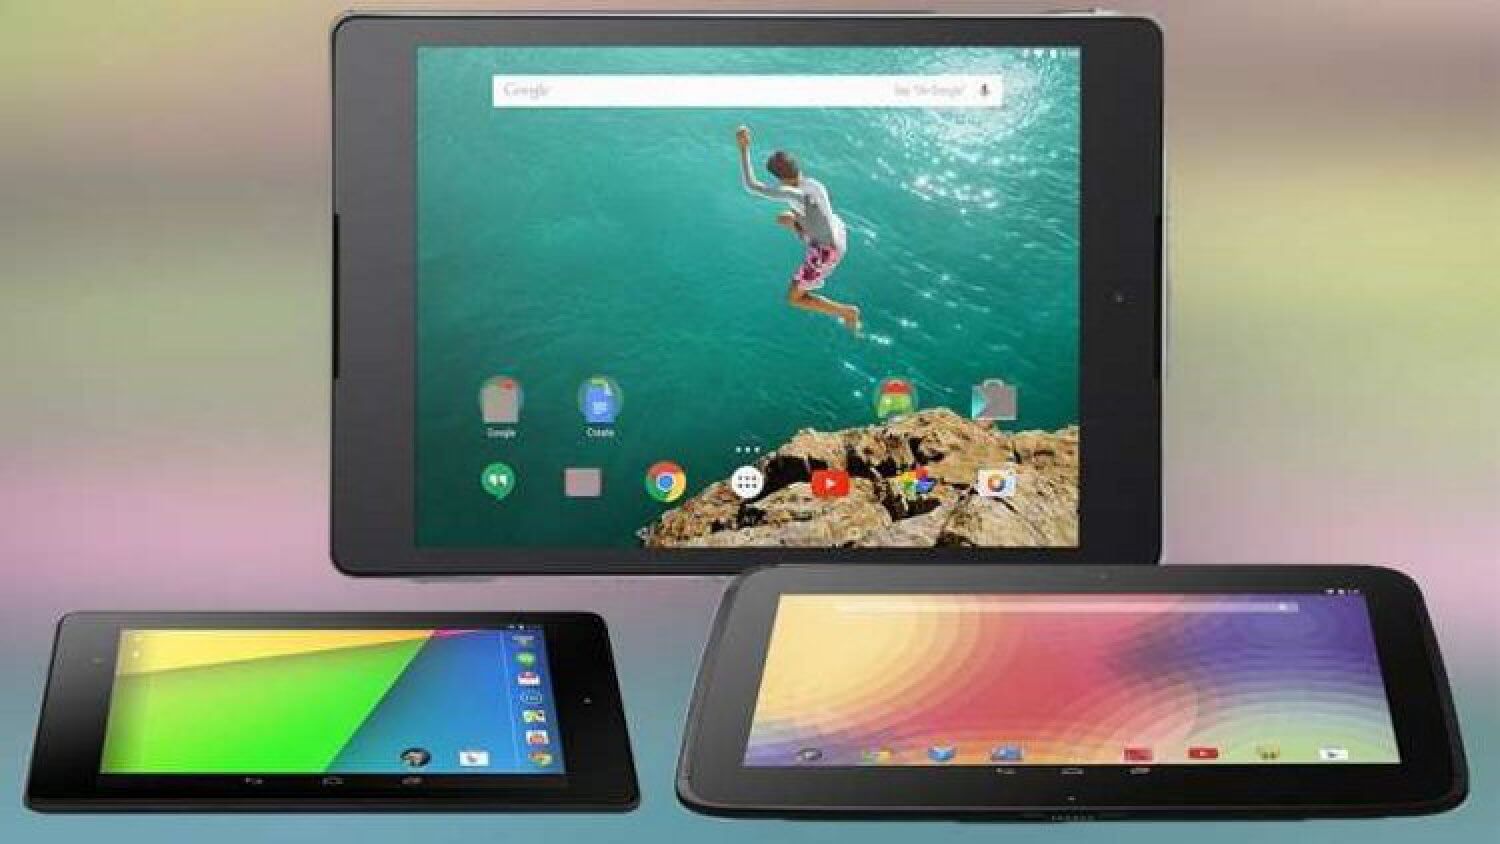 Nokia N1, iPad mini 3 и Sony Xperia Z3 Tablet Compact. Android- или iOS-планшеты сегодня впереди? Фото.